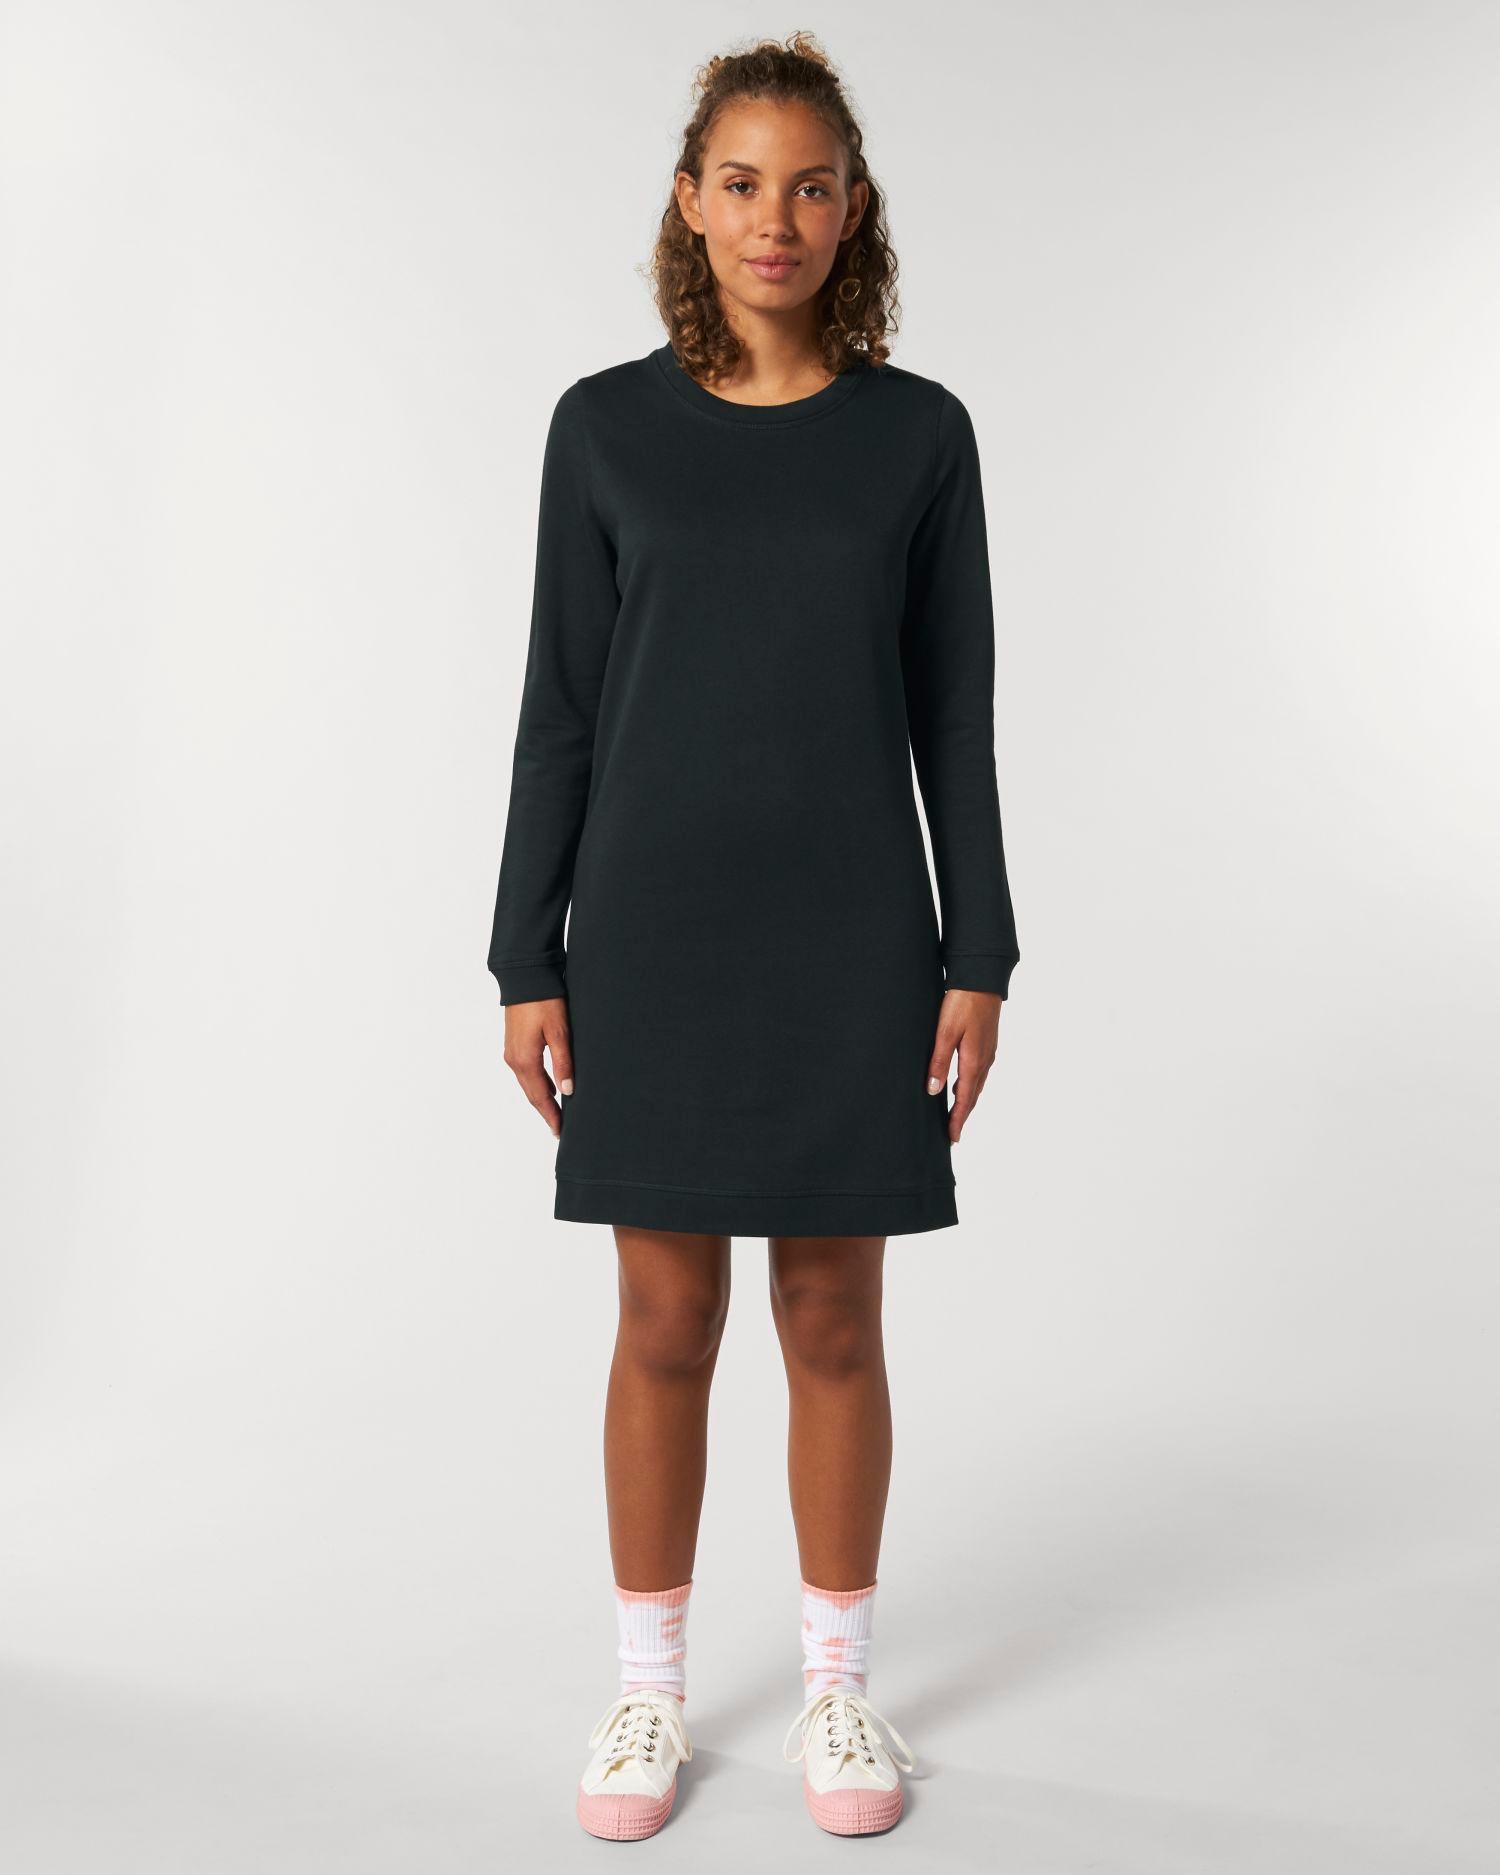 Stella Kicks Round Neck Sweatshirt Dress With Embroidery Or Digital Printing Black Heather Cranberry